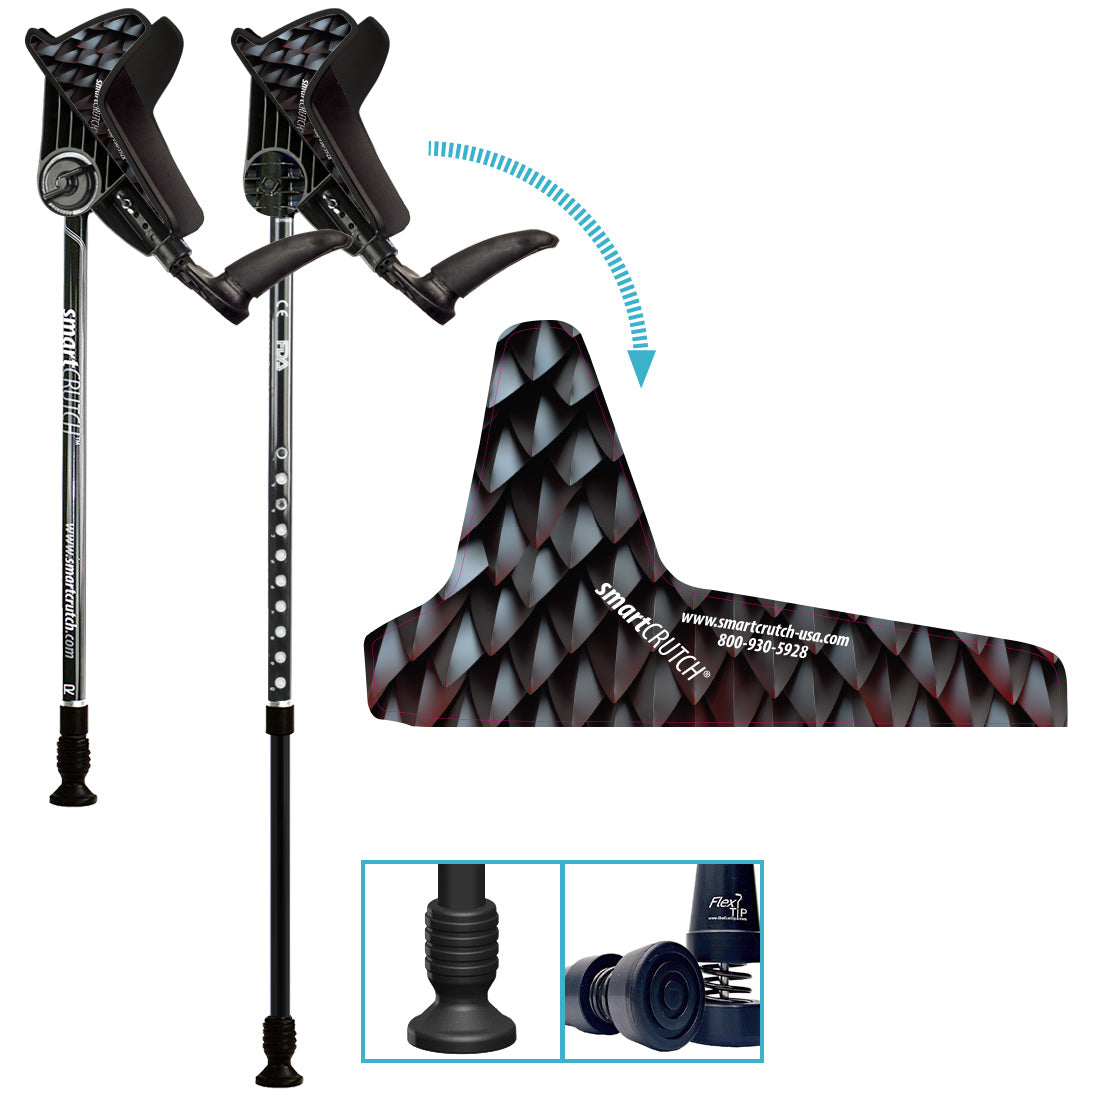 Forearm Crutches Dream Series - 7 New Designs - (height